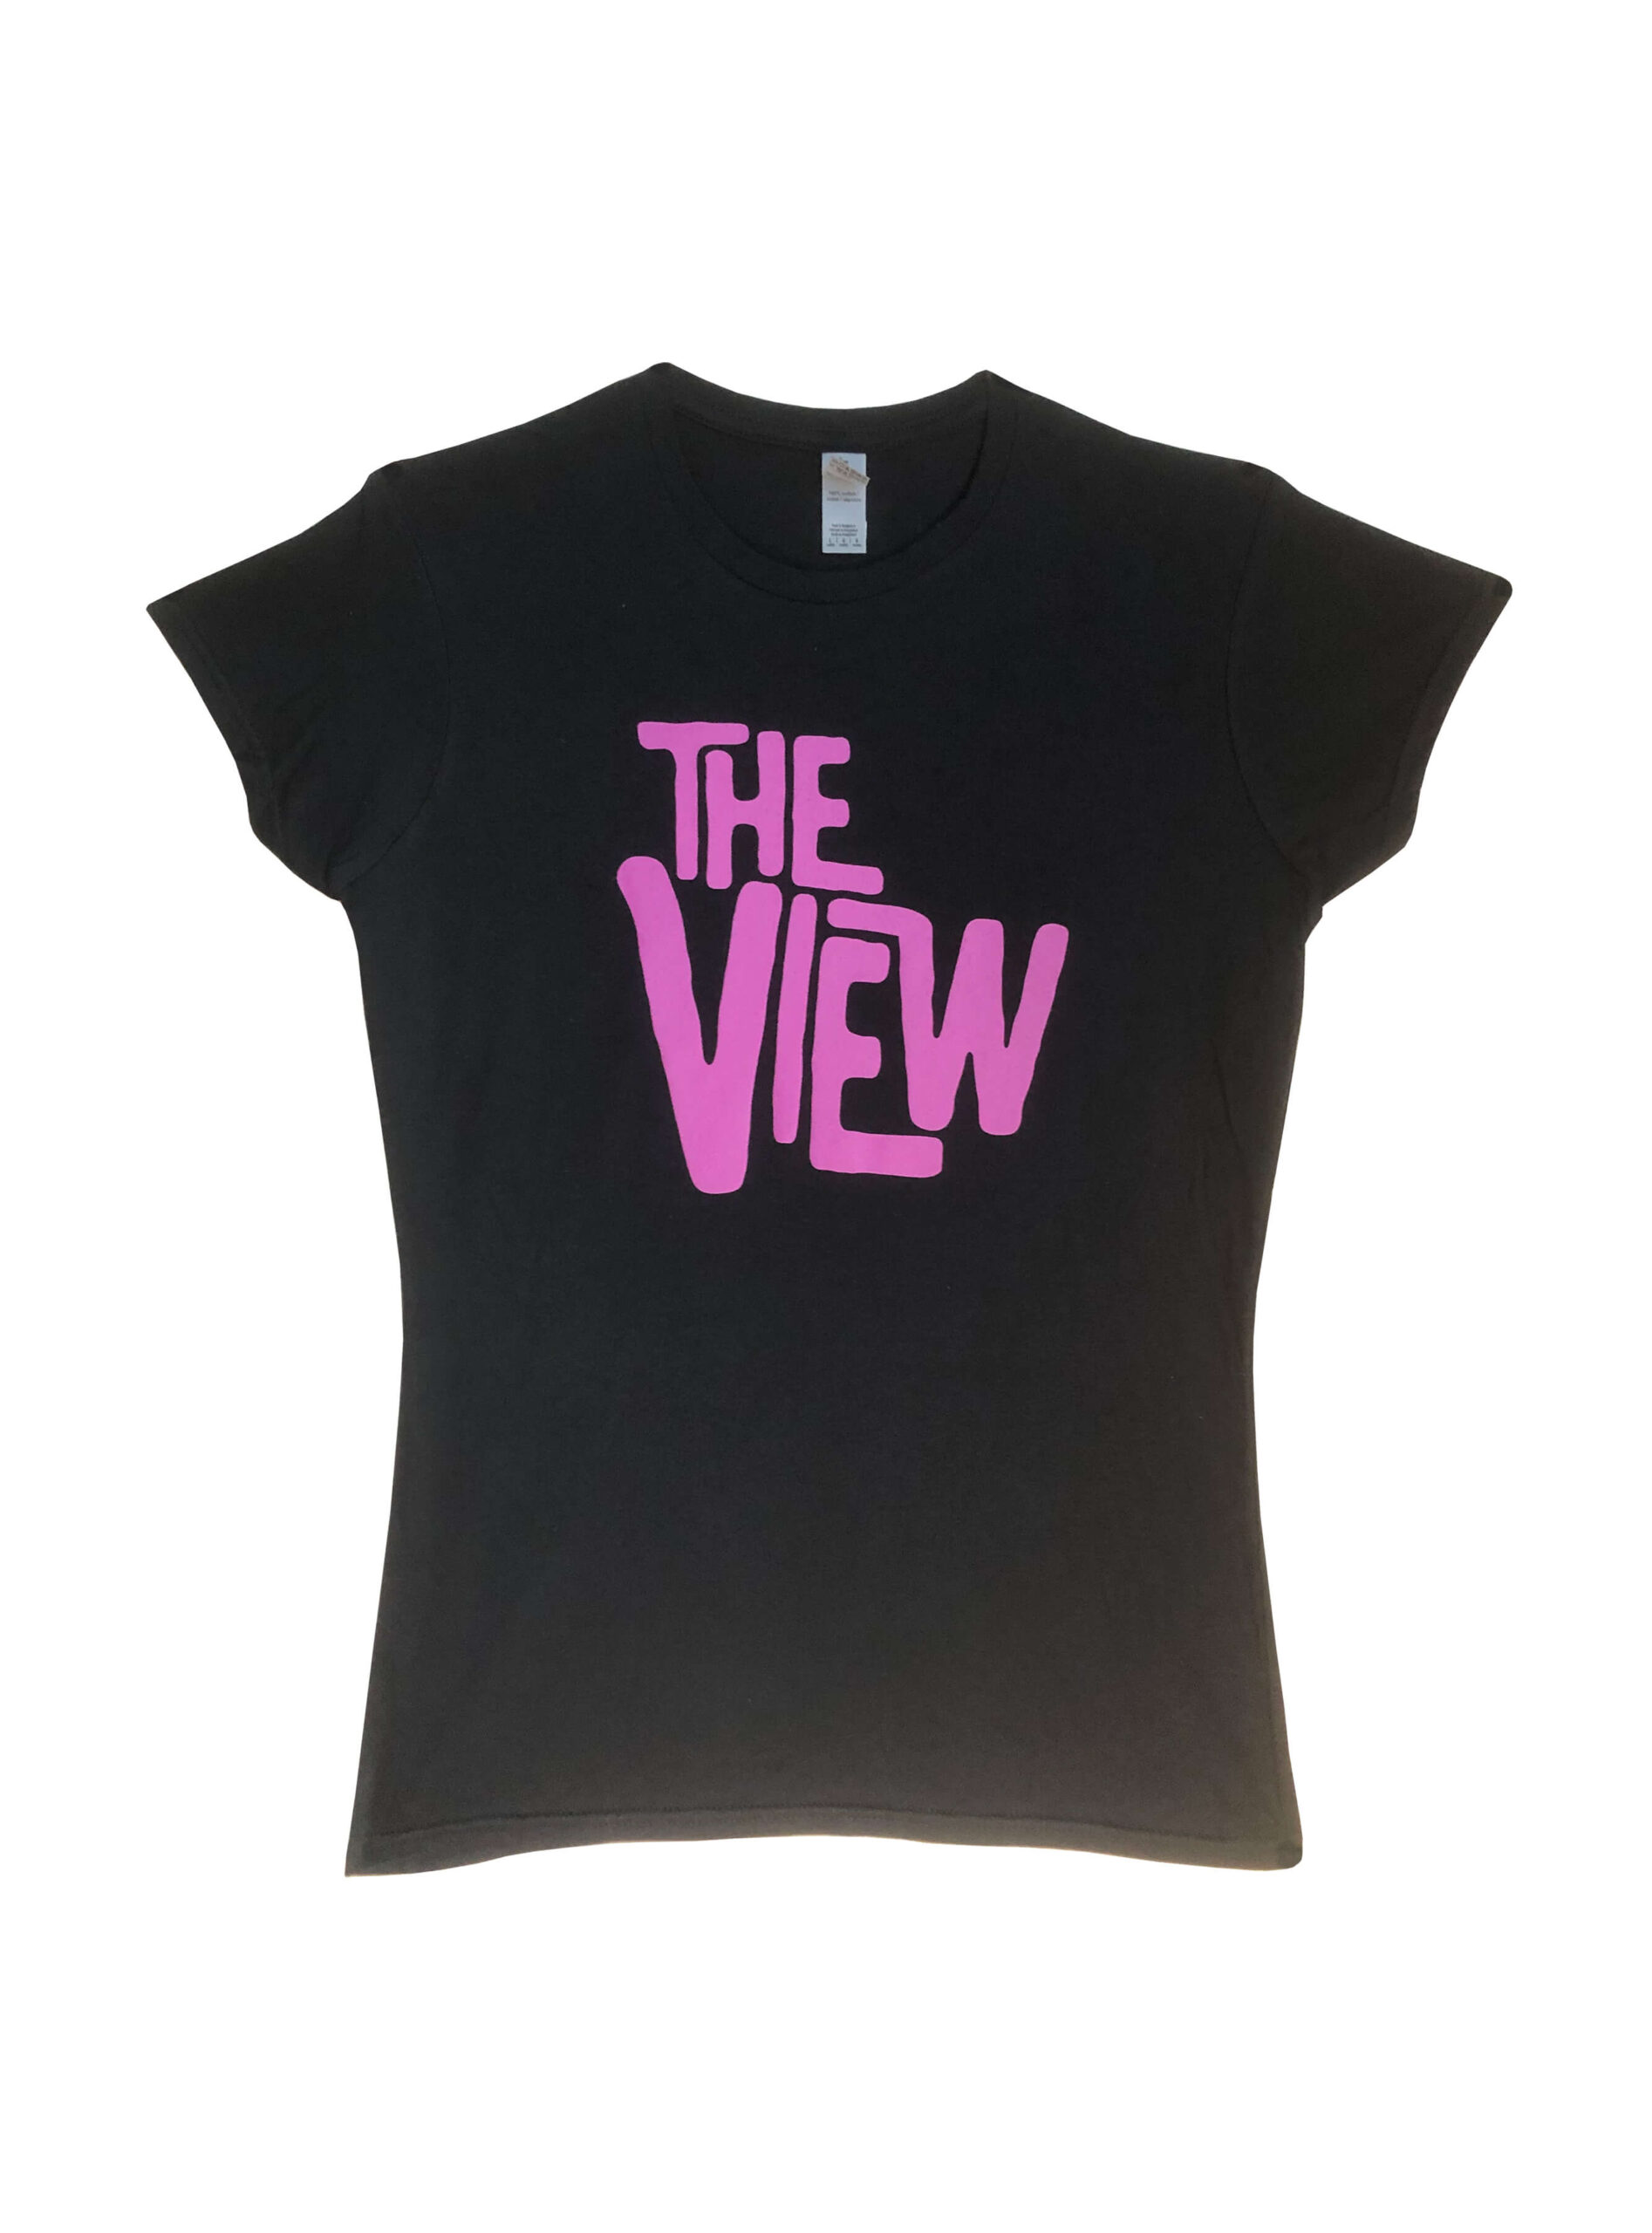 The View Ladies black tee w purple logo